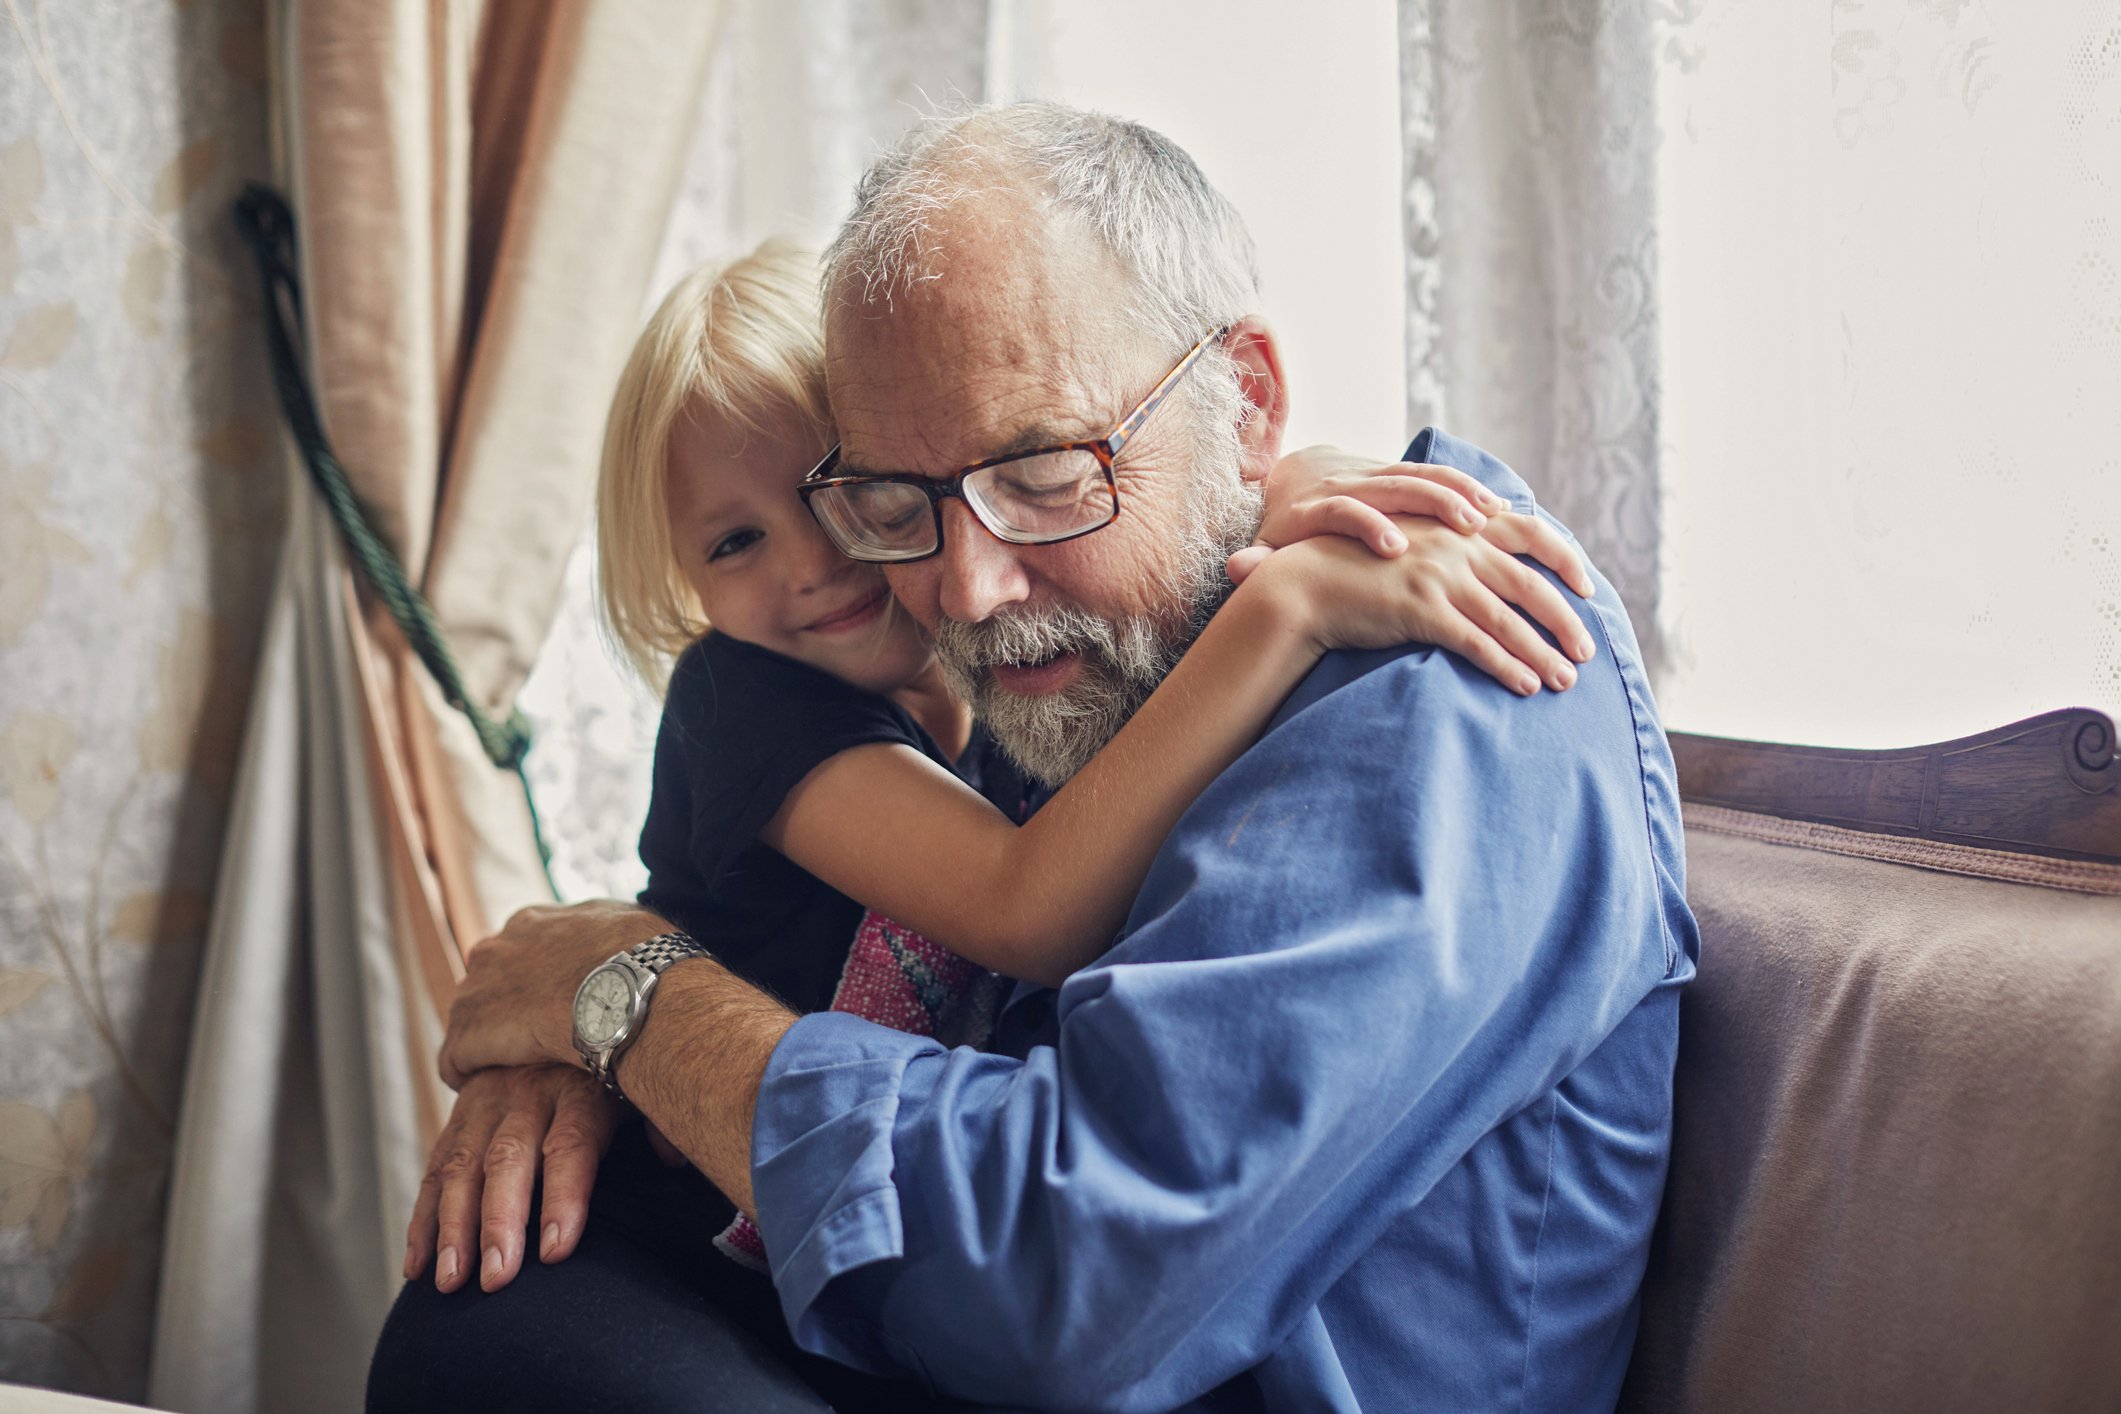 John hugging his granddaughter. | Photo: Getty Images